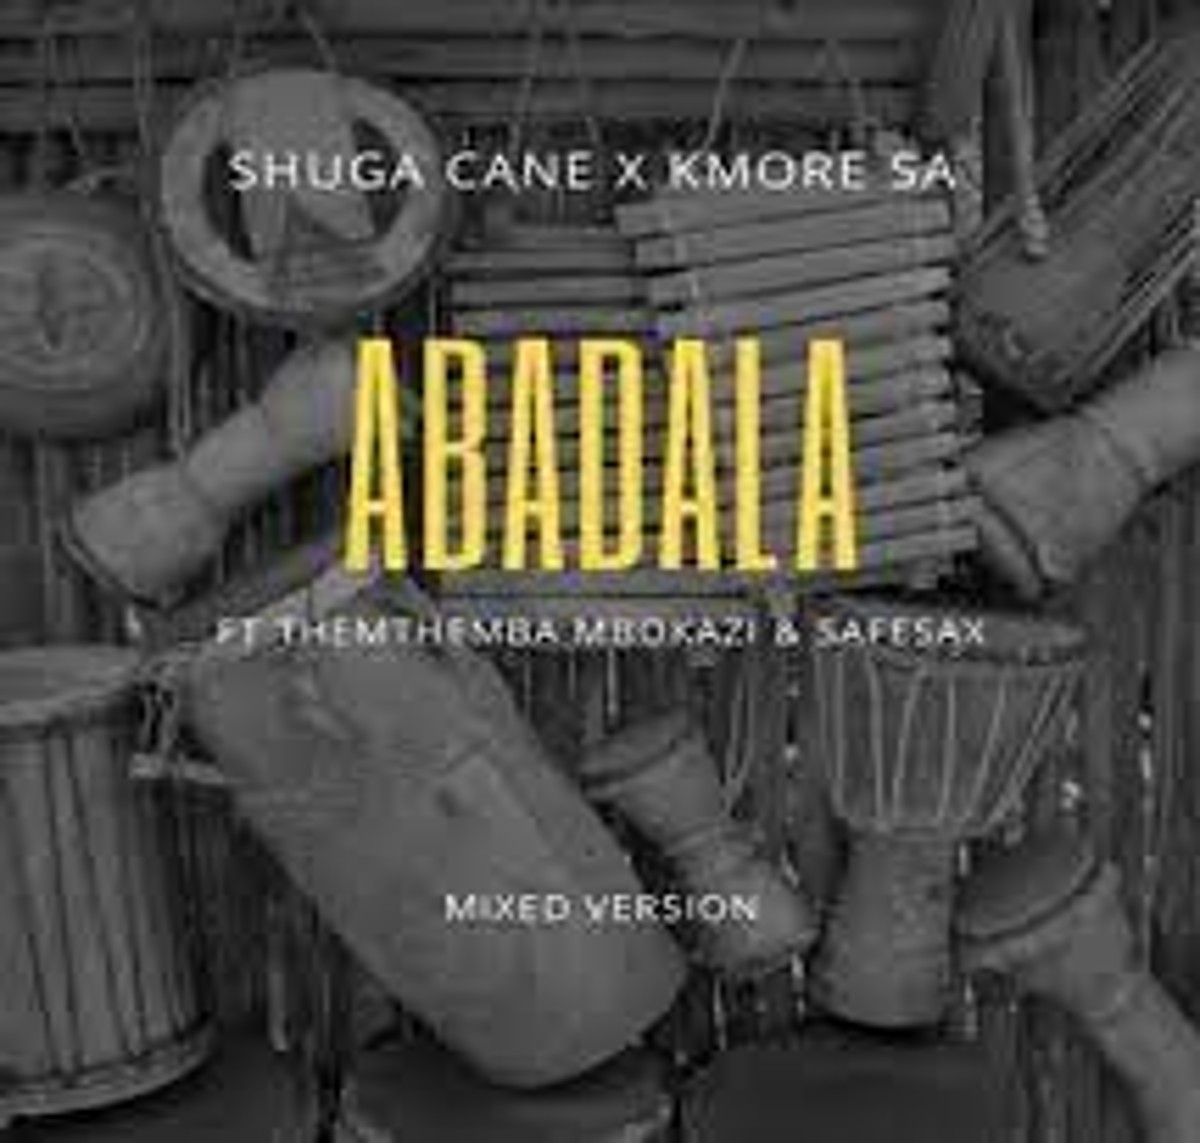 Shuga Cane – Abadala Ft Kmore SA, Themba Mbokazi & SafeSax Mp3 Download Fakaza: